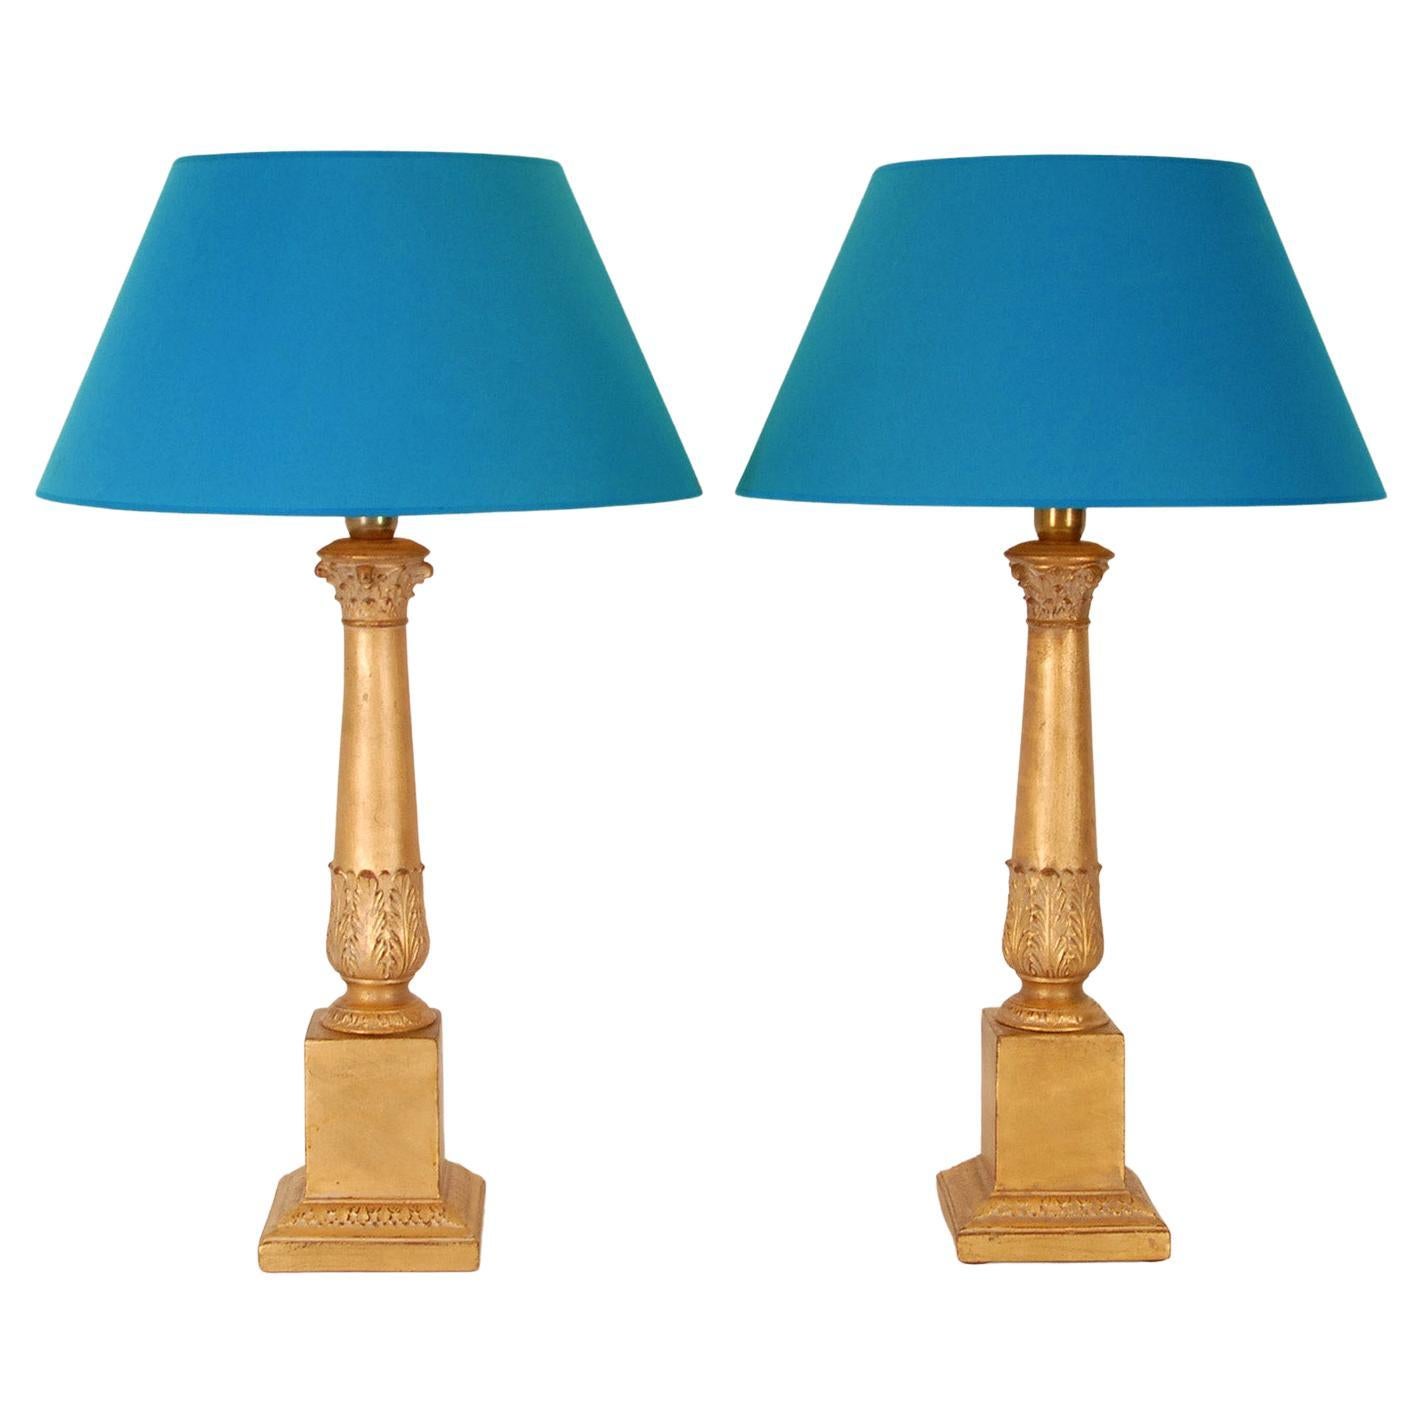 Vintage Italian Lamps Gold vergoldete korinthische Säule Tischlampen ein Paar